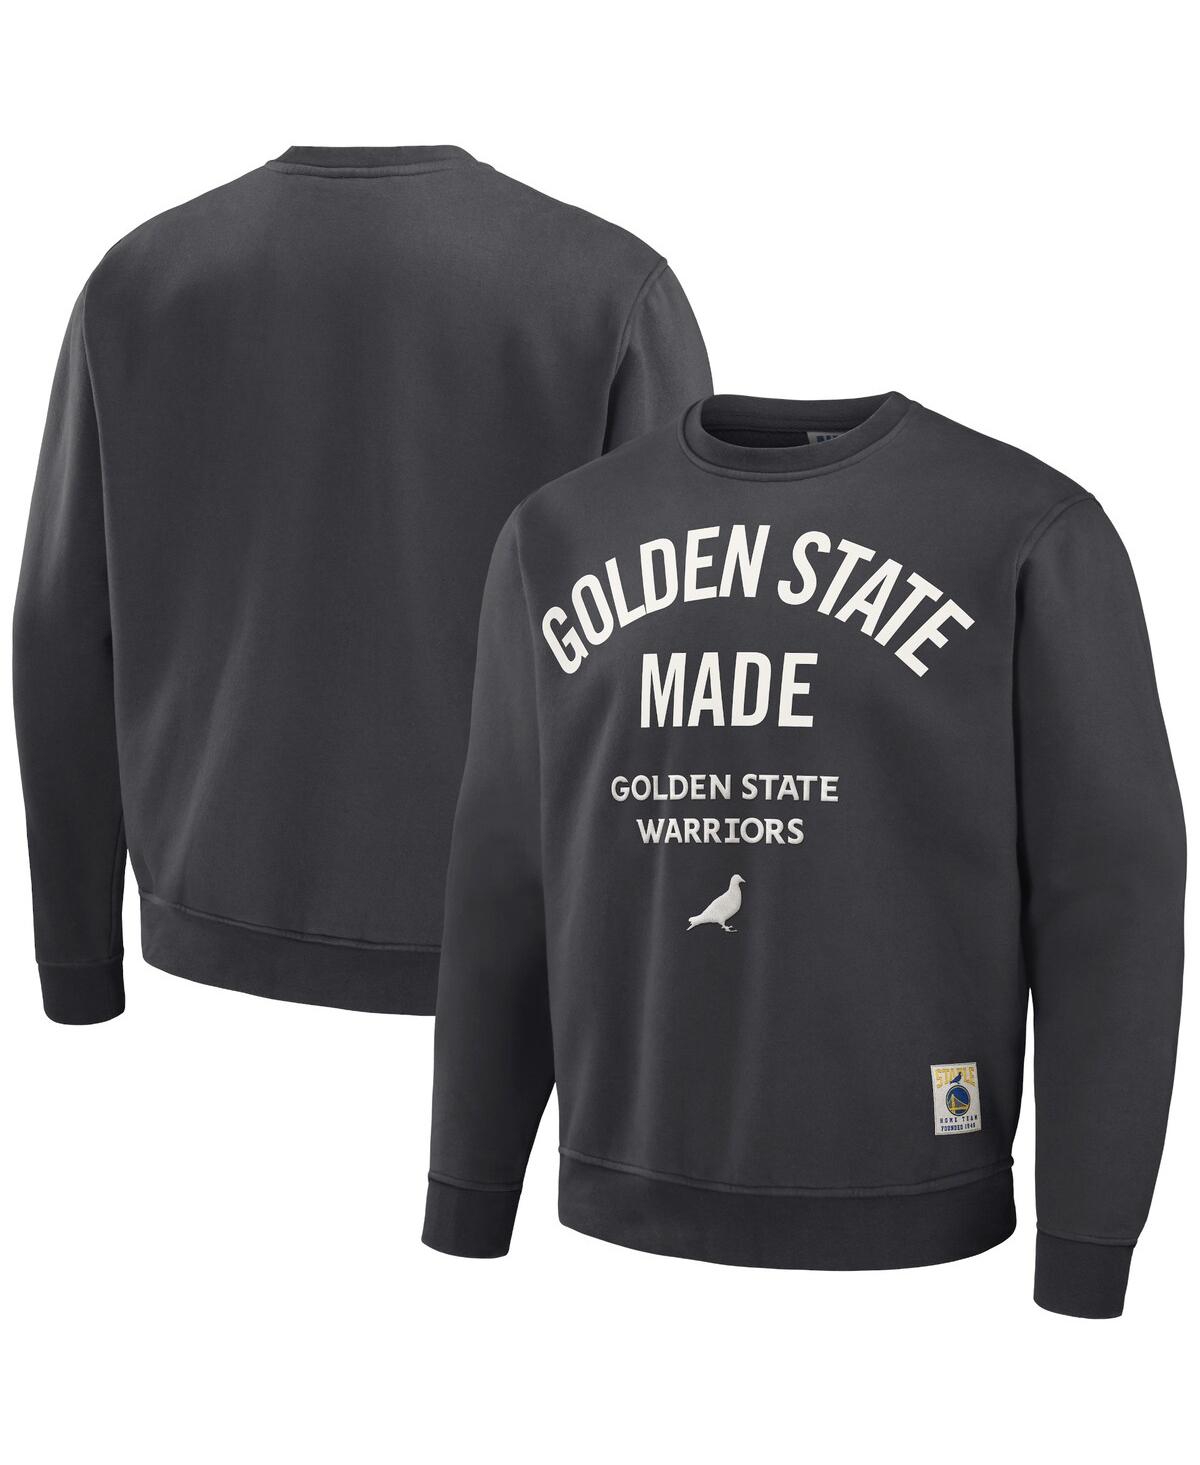 Men's Nba x Staple Anthracite Golden State Warriors Plush Pullover Sweatshirt - Anthracite